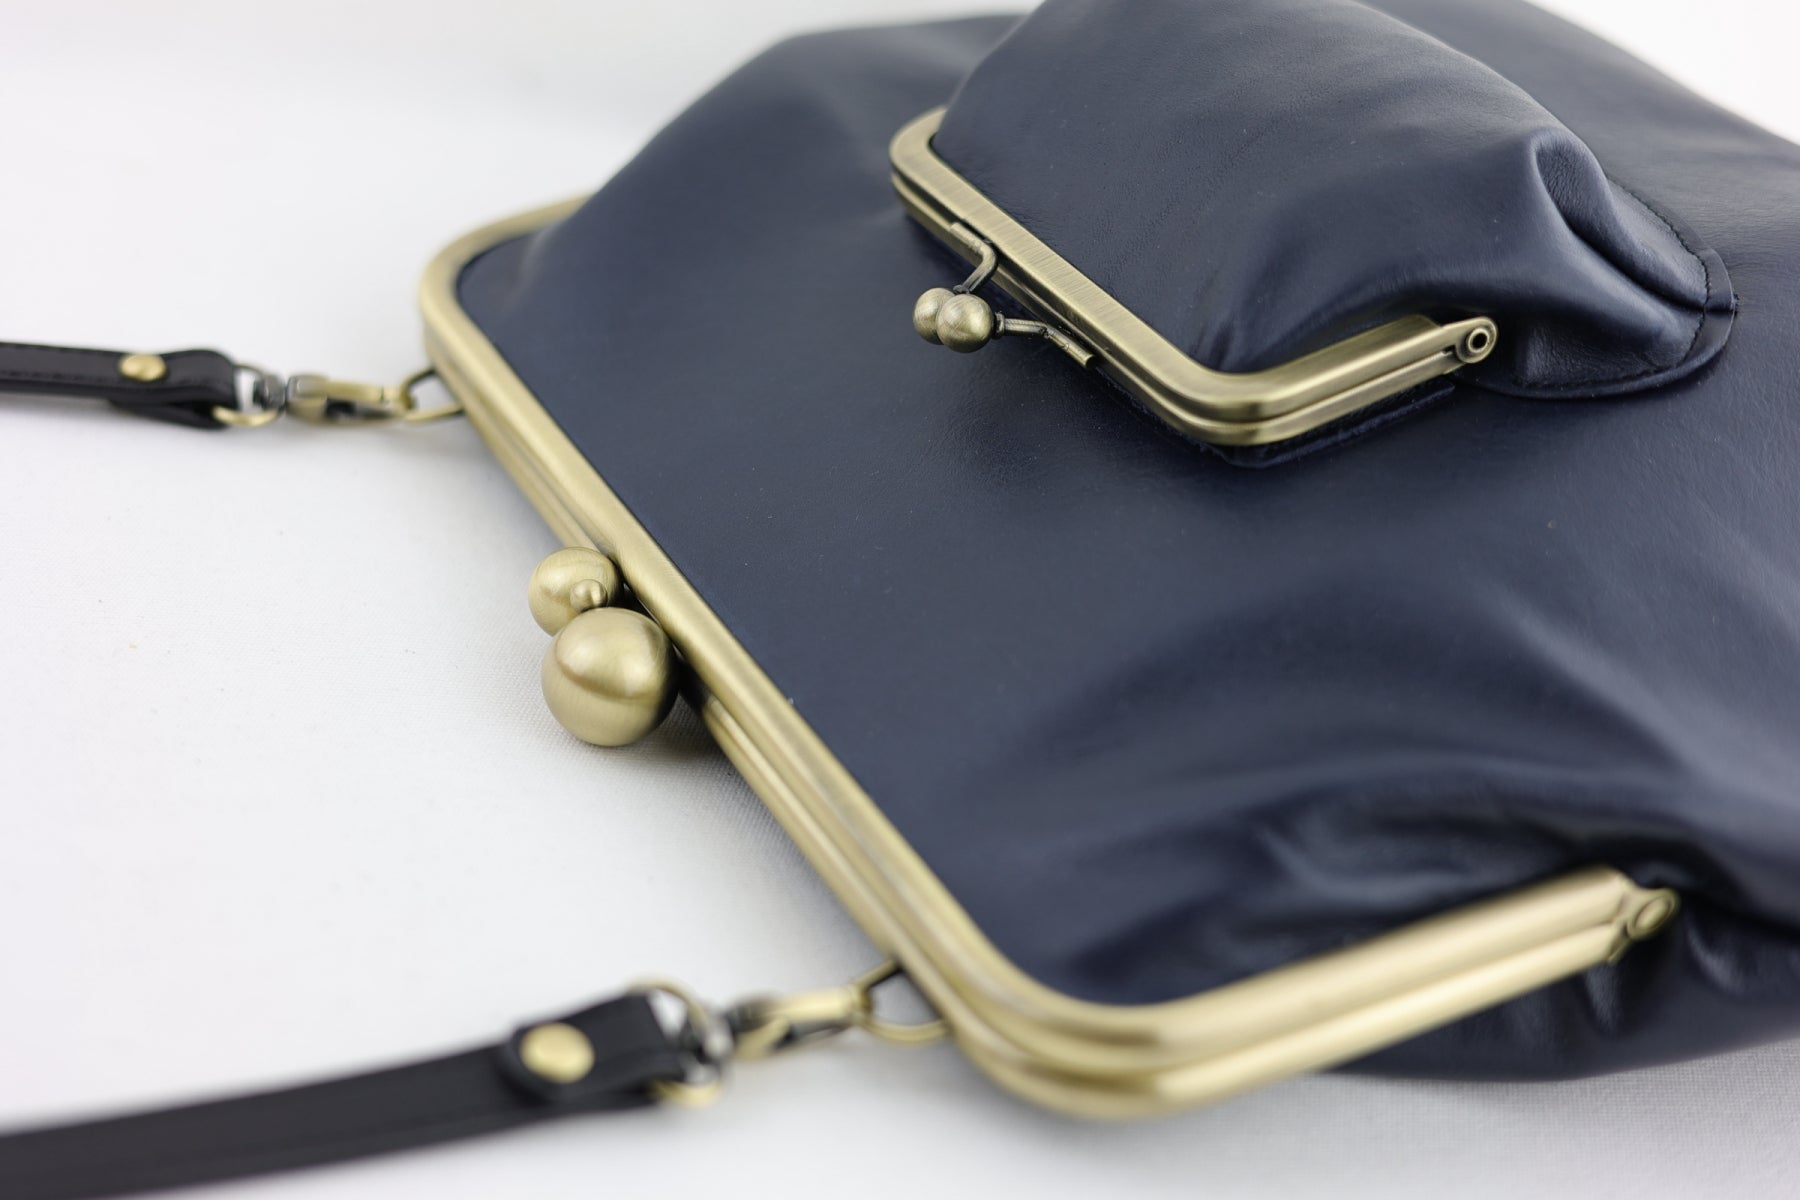 Midnight Blue Leather Crossbody Bag Handmade in Australia | PINK OASIS